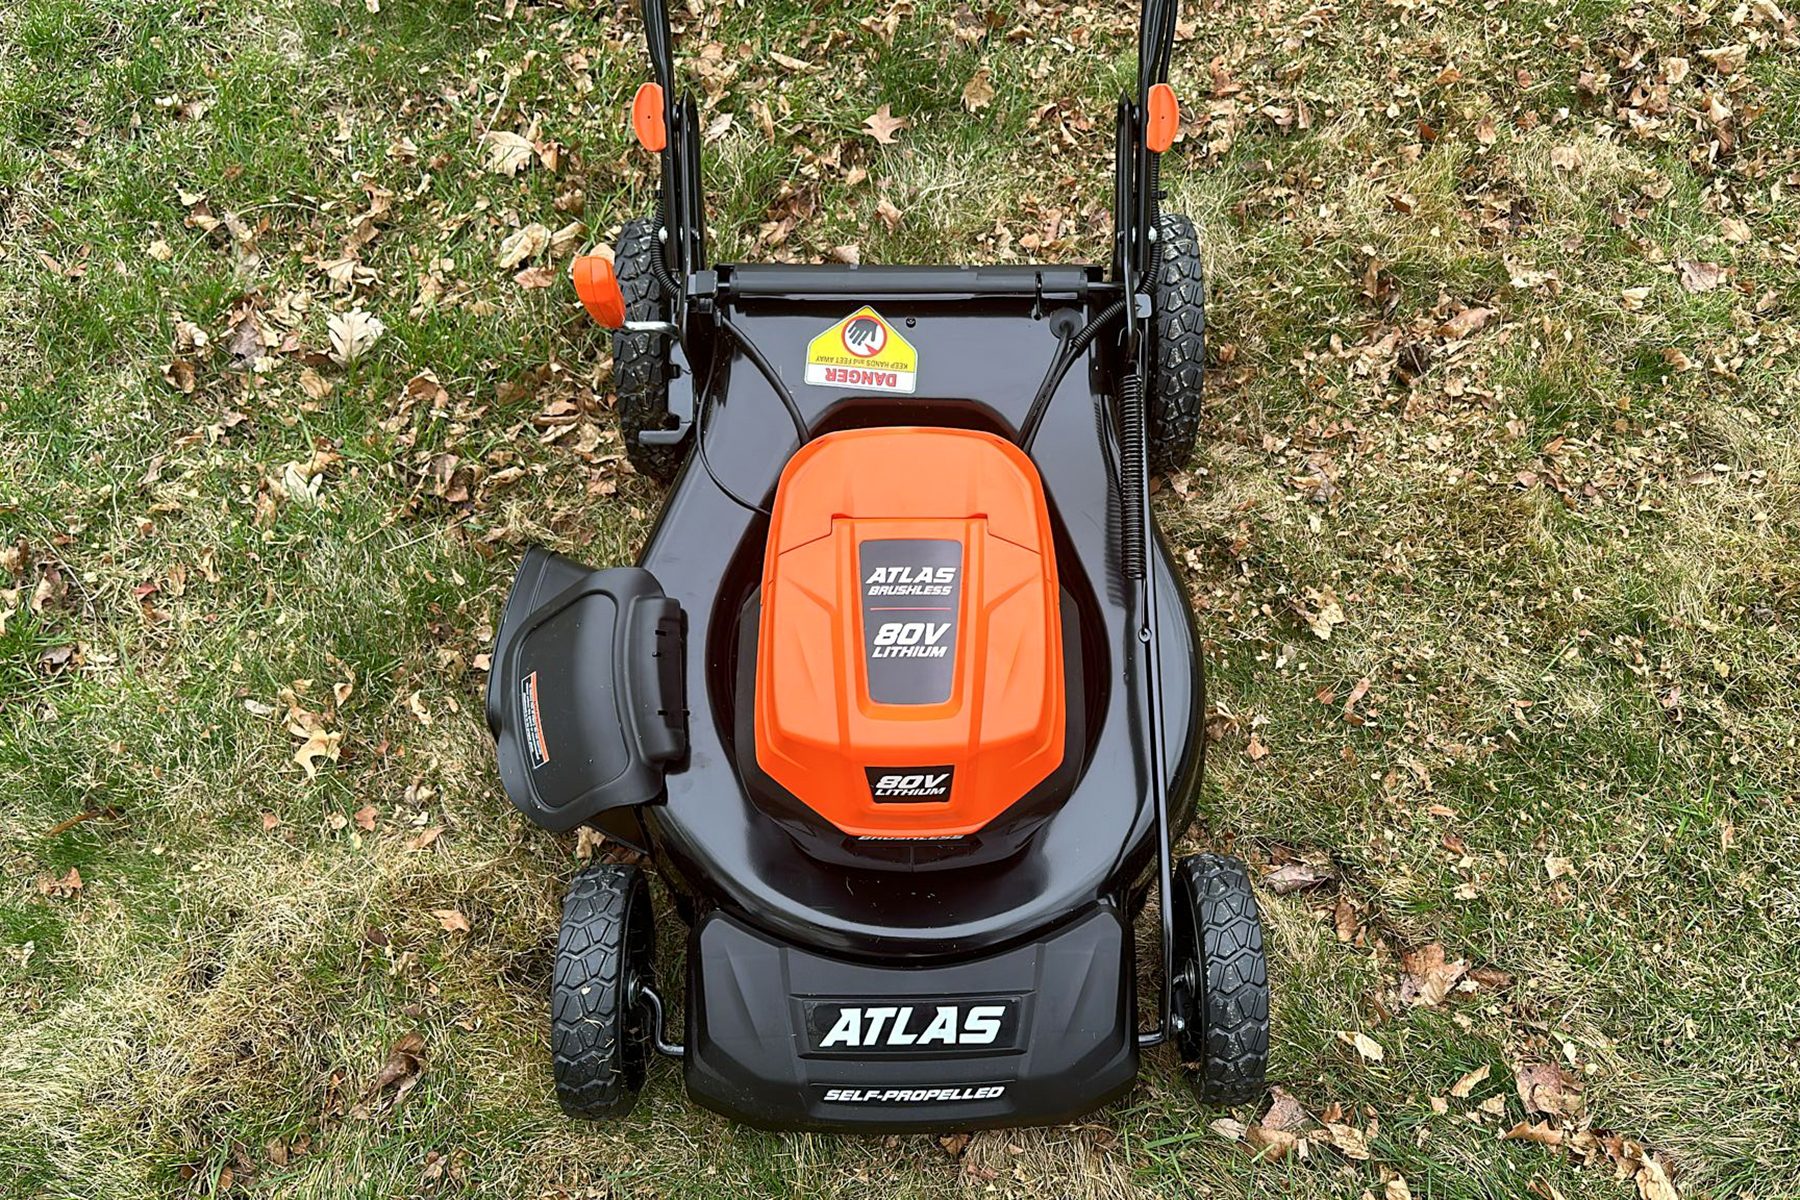 Atlas Lawn Mower Review A Ssedit